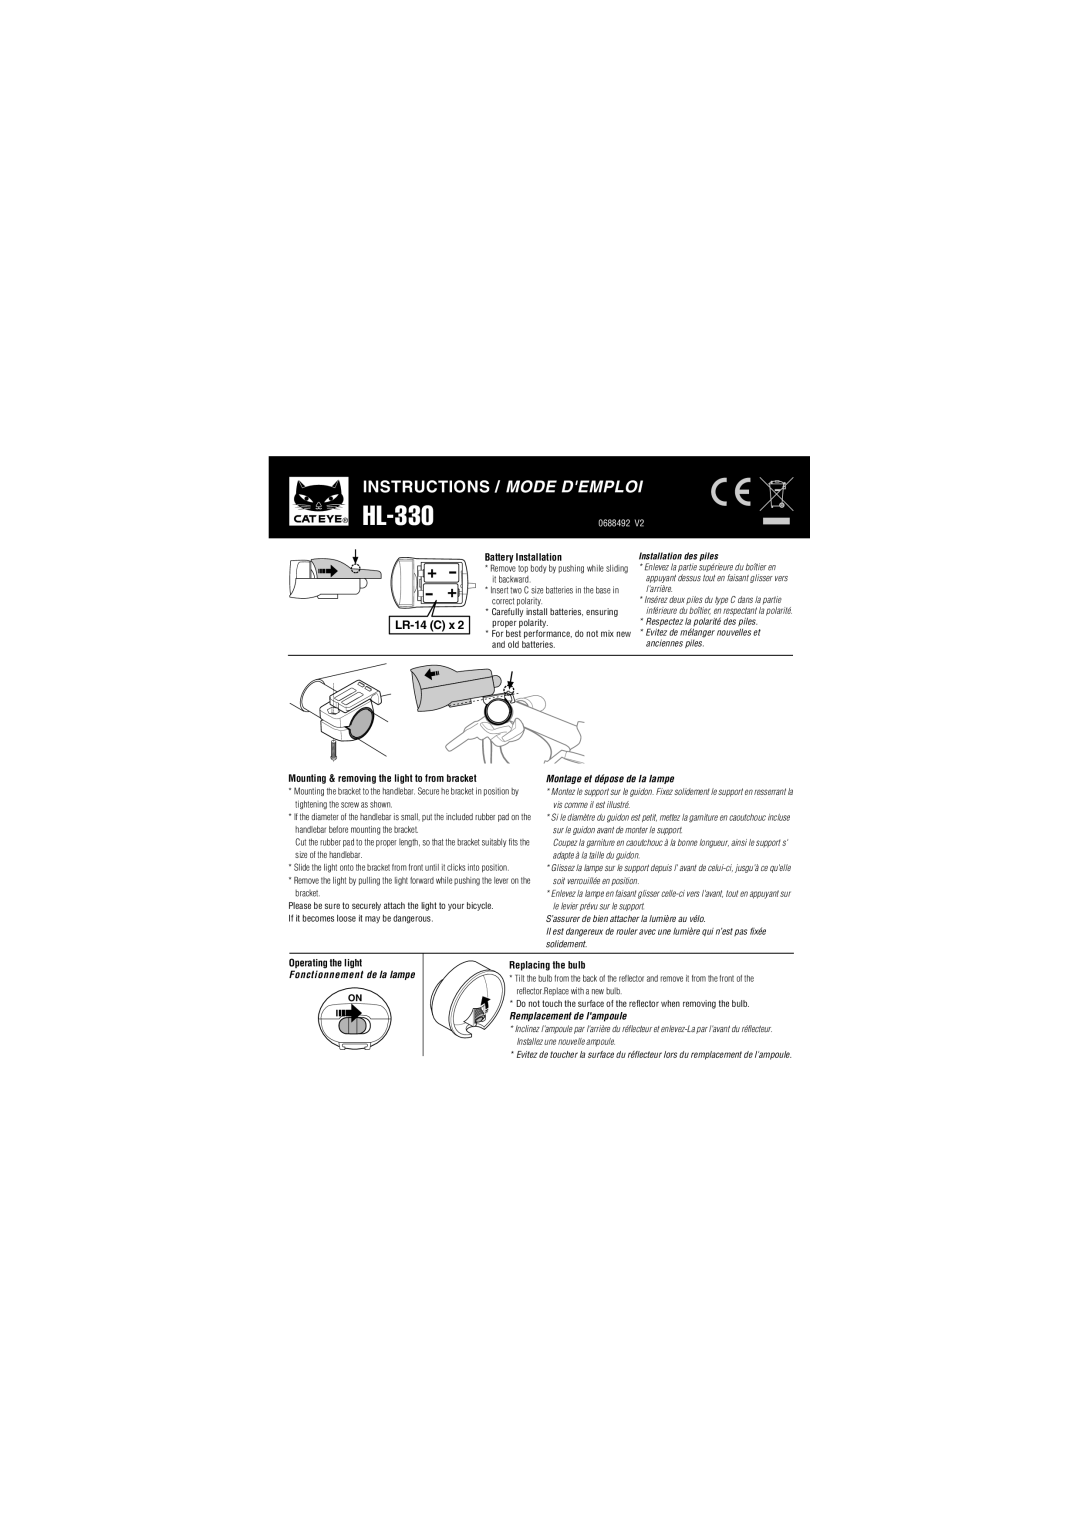 Cateye HL-330 manual Instructions / Mode Demploi, + - - +, LR-14C, Battery Installation, Installation des piles 